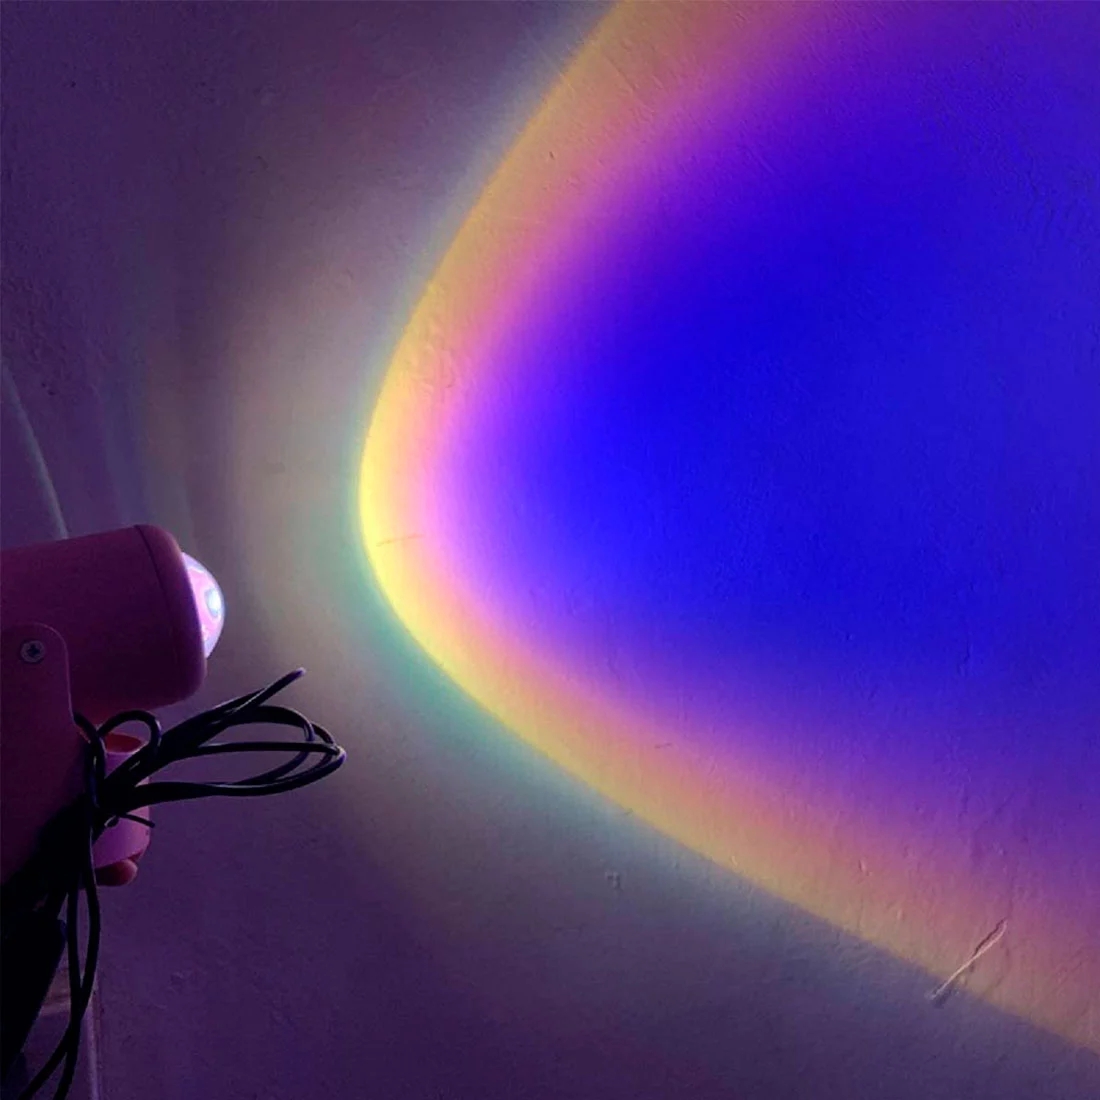 USB-Sunset-Projection-Lamp-Aesthetic-Table-Lamp-Anti-glare-LED-Night-Light-Romantic-Visual-Experienc-1822954-10